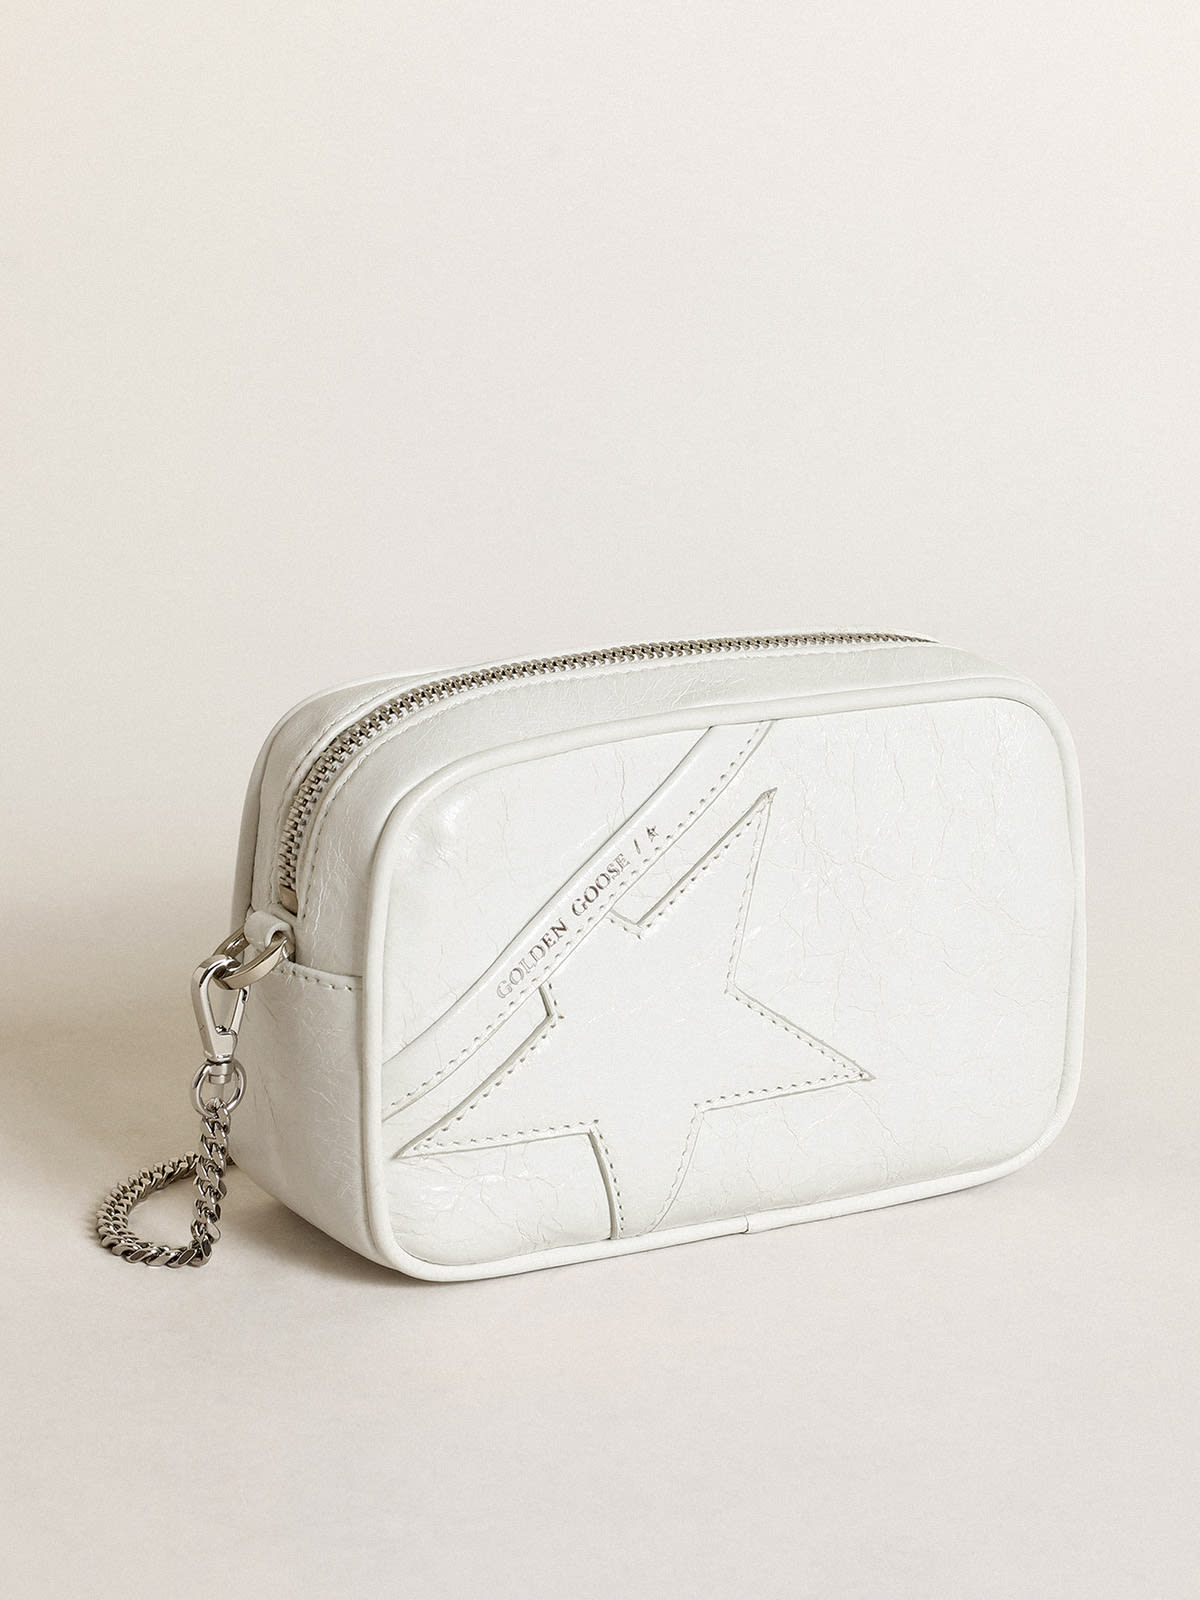 Golden Goose - Bolso Mini Star Bag de piel brillante color blanco con estrella tono sobre tono in 